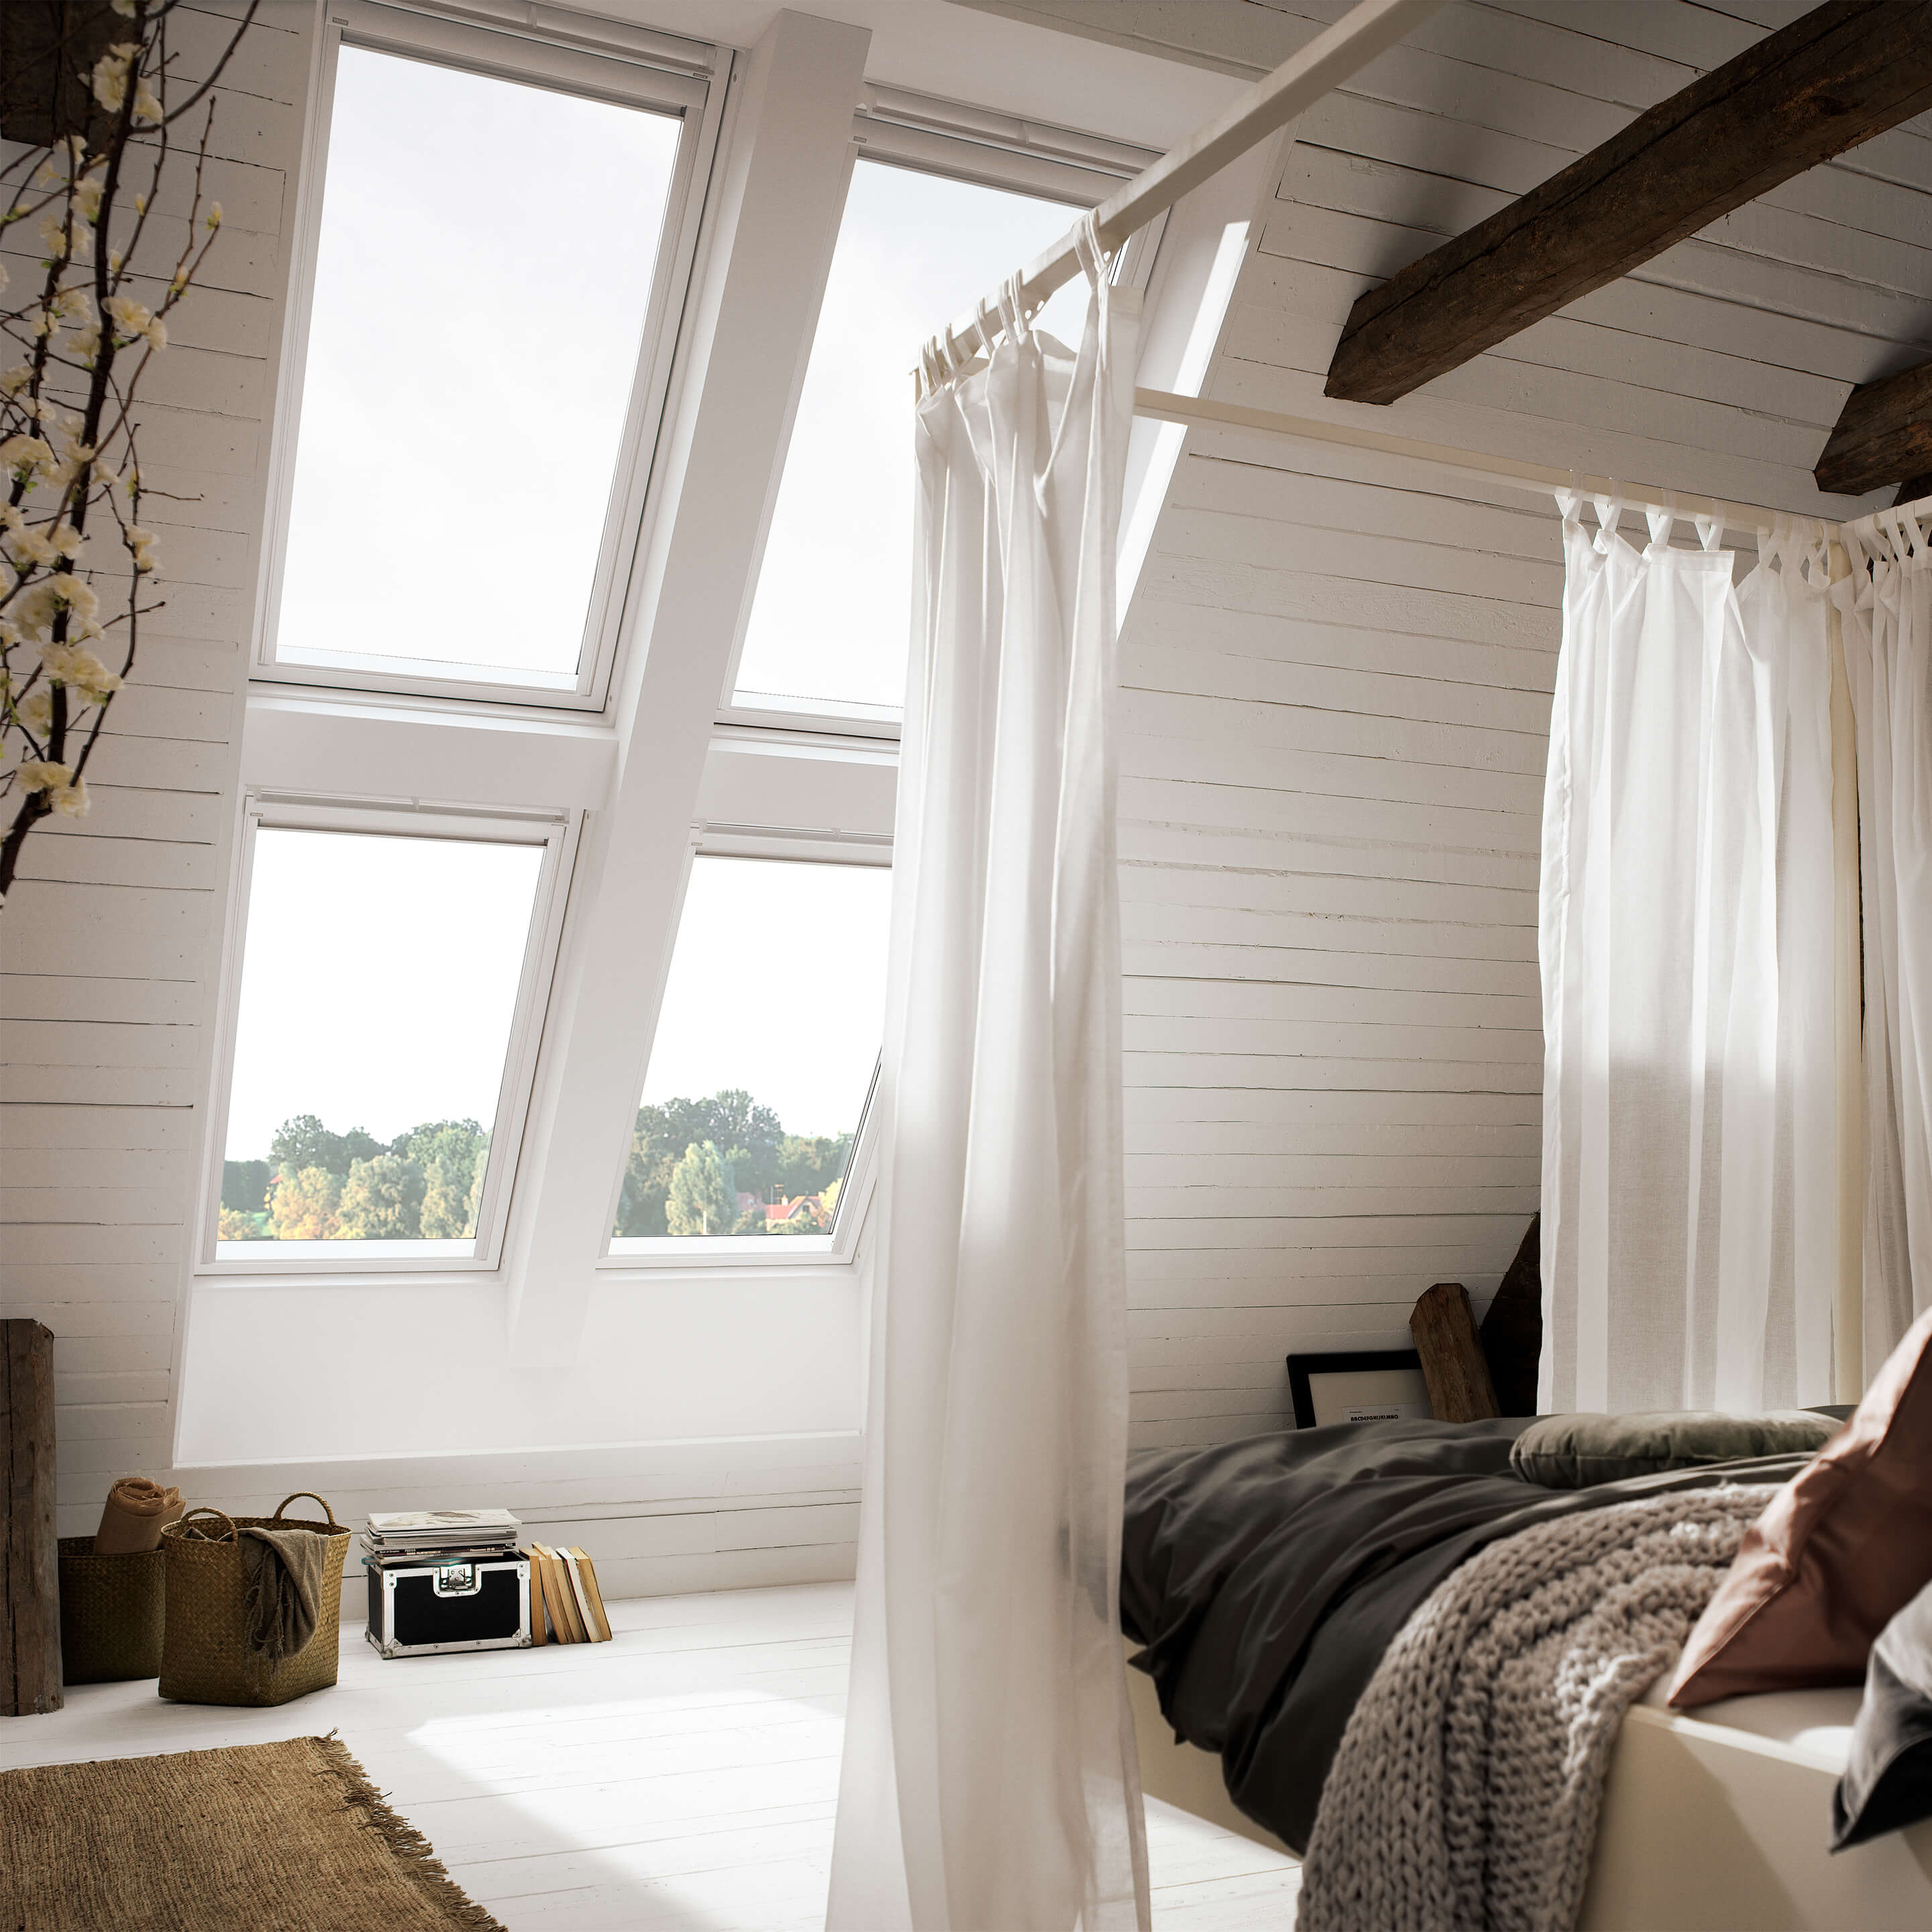 VELUX quattro multiple roof window solution interior view in bedroom